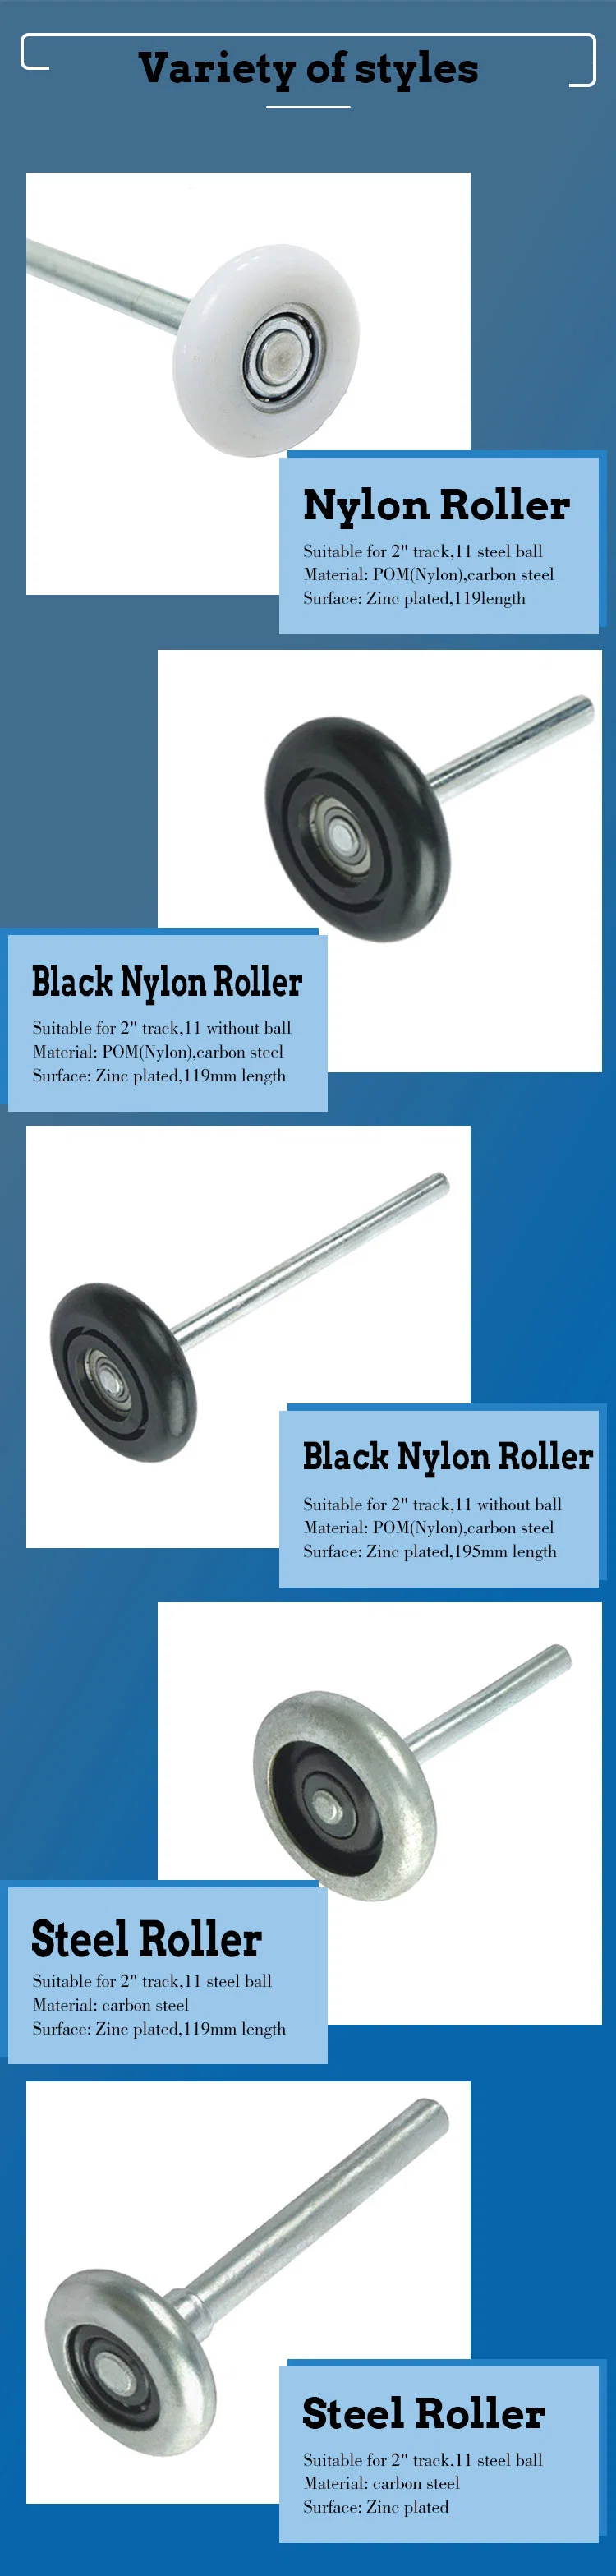 Commercial Heavy Duty Garage Door Hardware Parts Nylon Roller 11 Steel Ball Zinc Plated Precision 6200zz Black Nylon Rollers